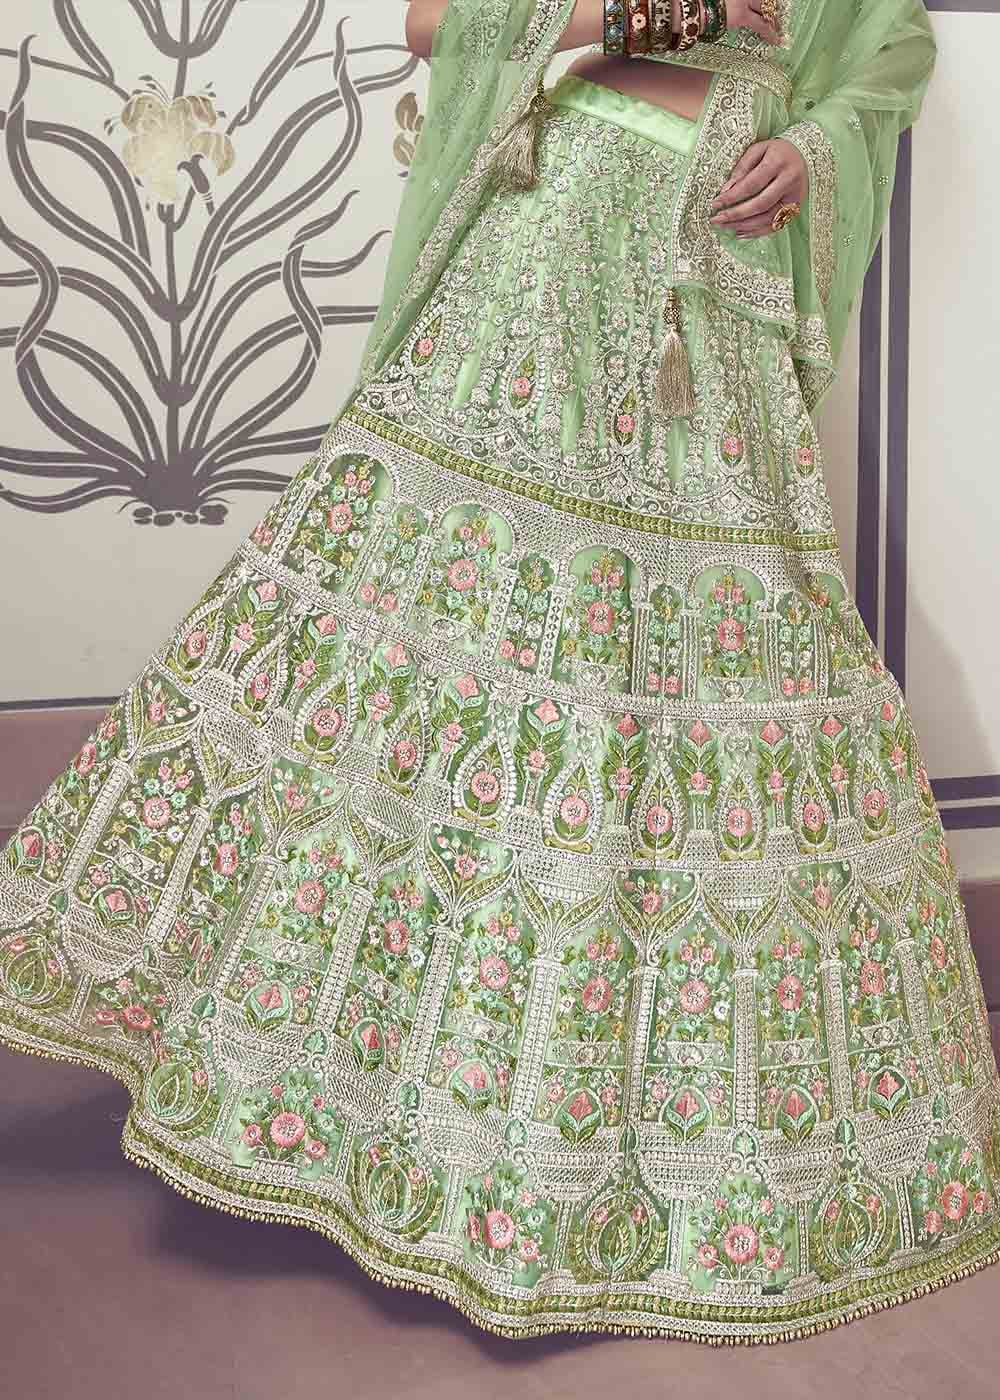 Light Green Net Lehenga Choli with Floral Embroidery,Jarkan & Zari work: Top Pick